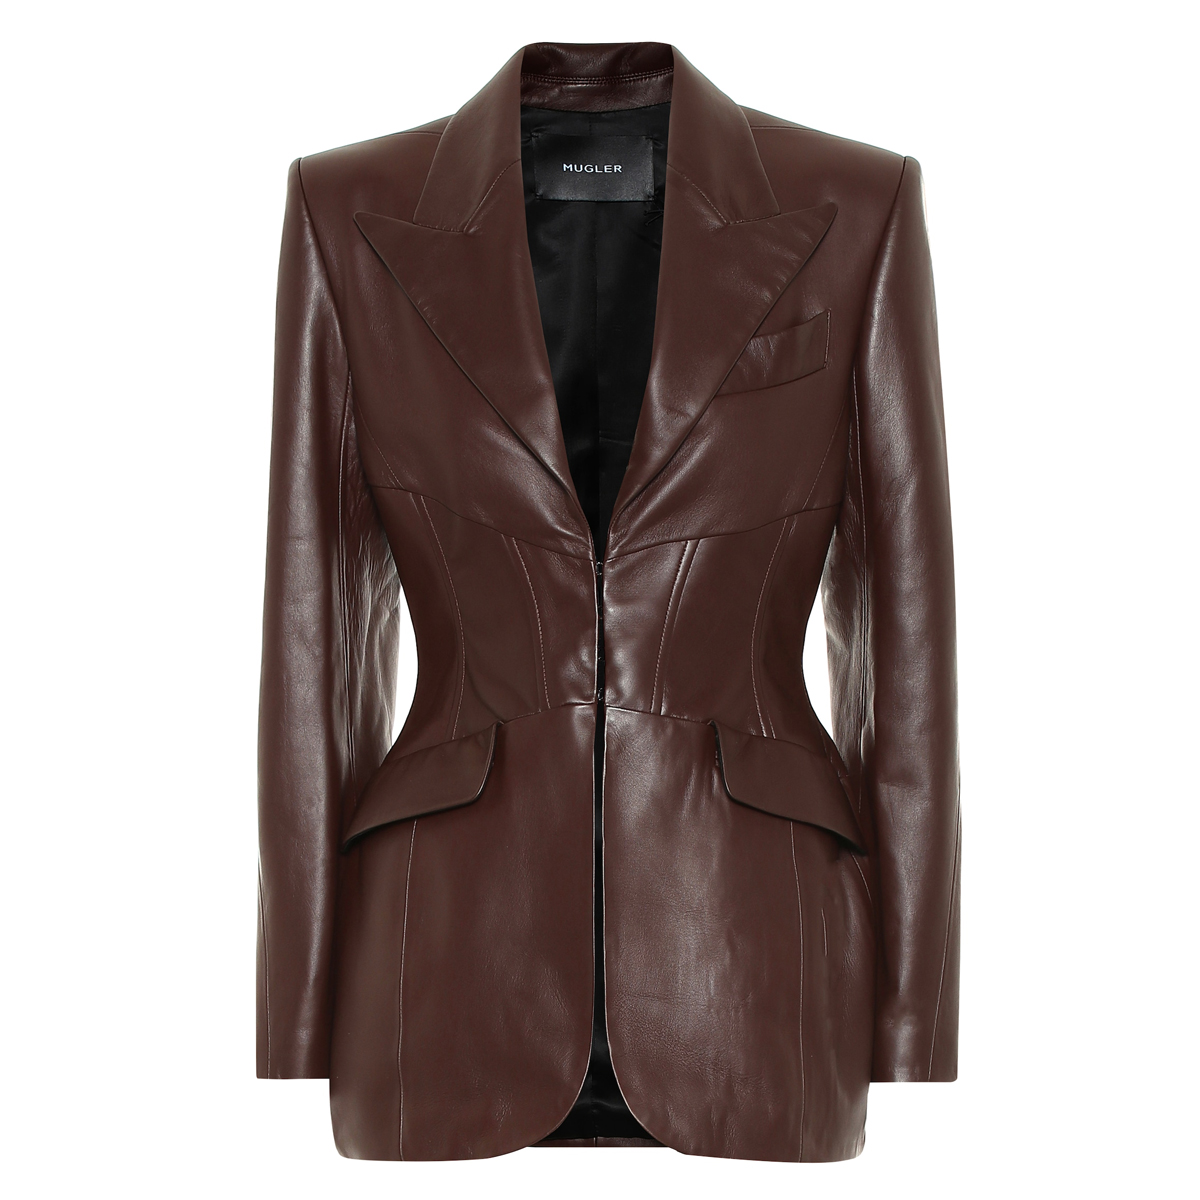 Shop 15 Versatile Leather Jackets for Fall - Coveteur